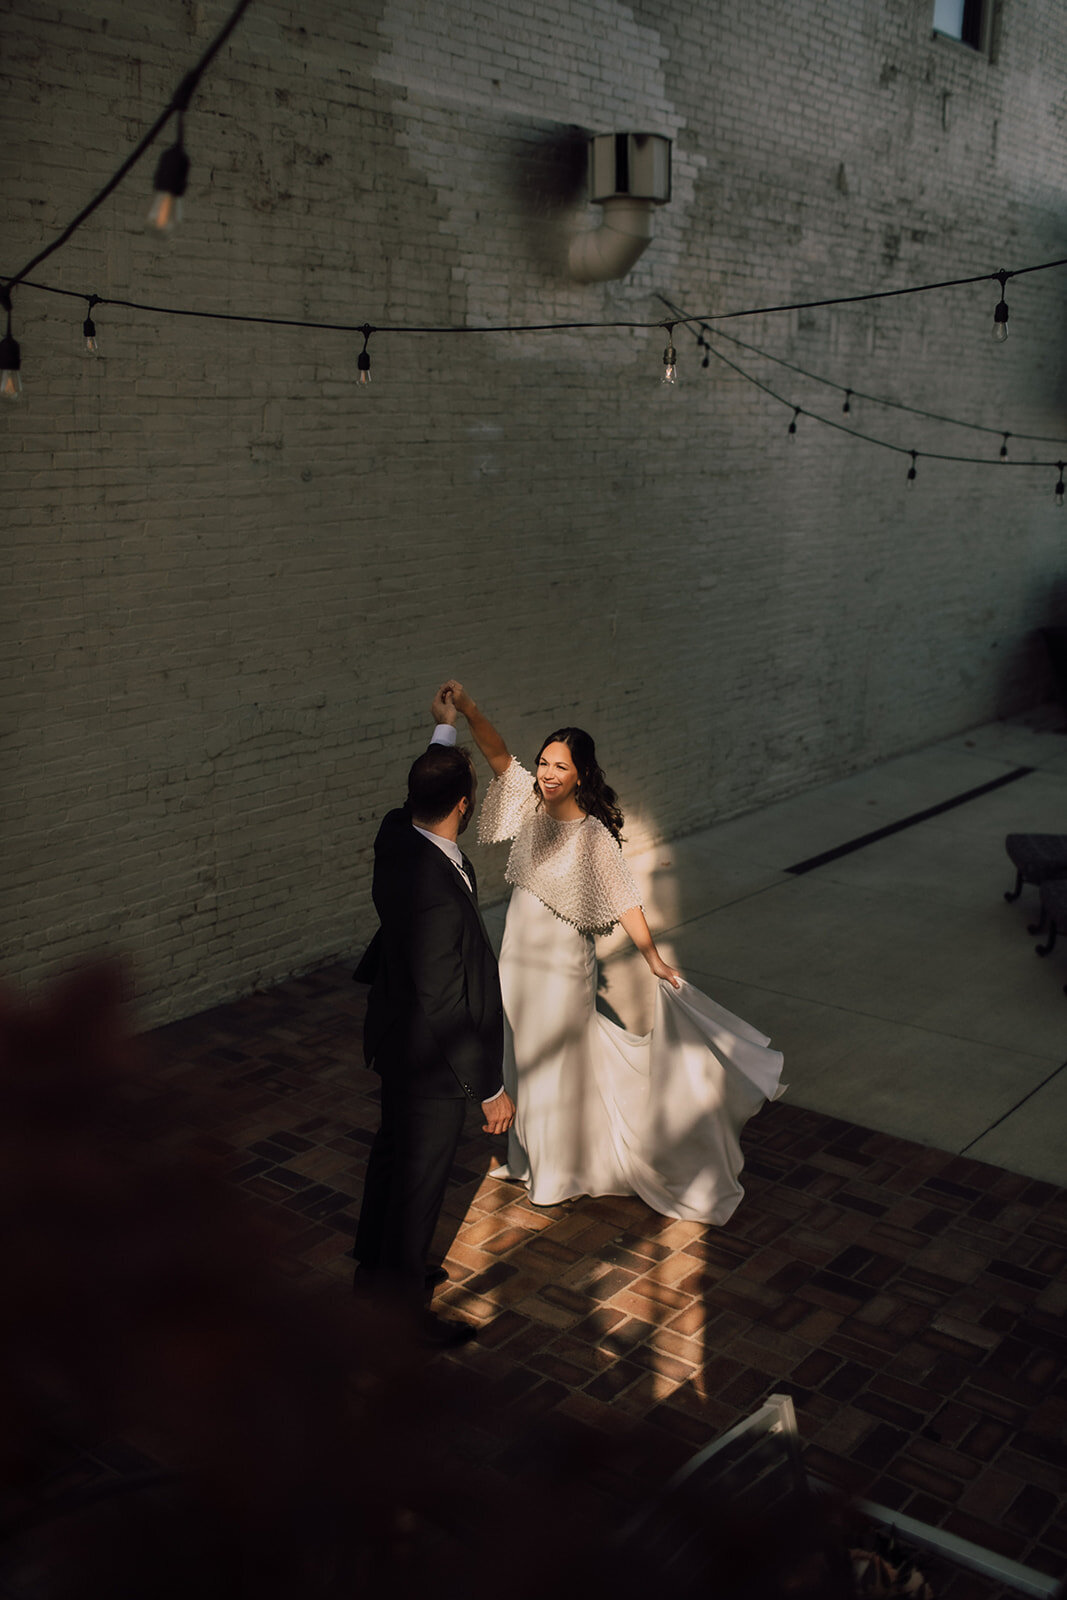 Bride and groom dance in an alleyway